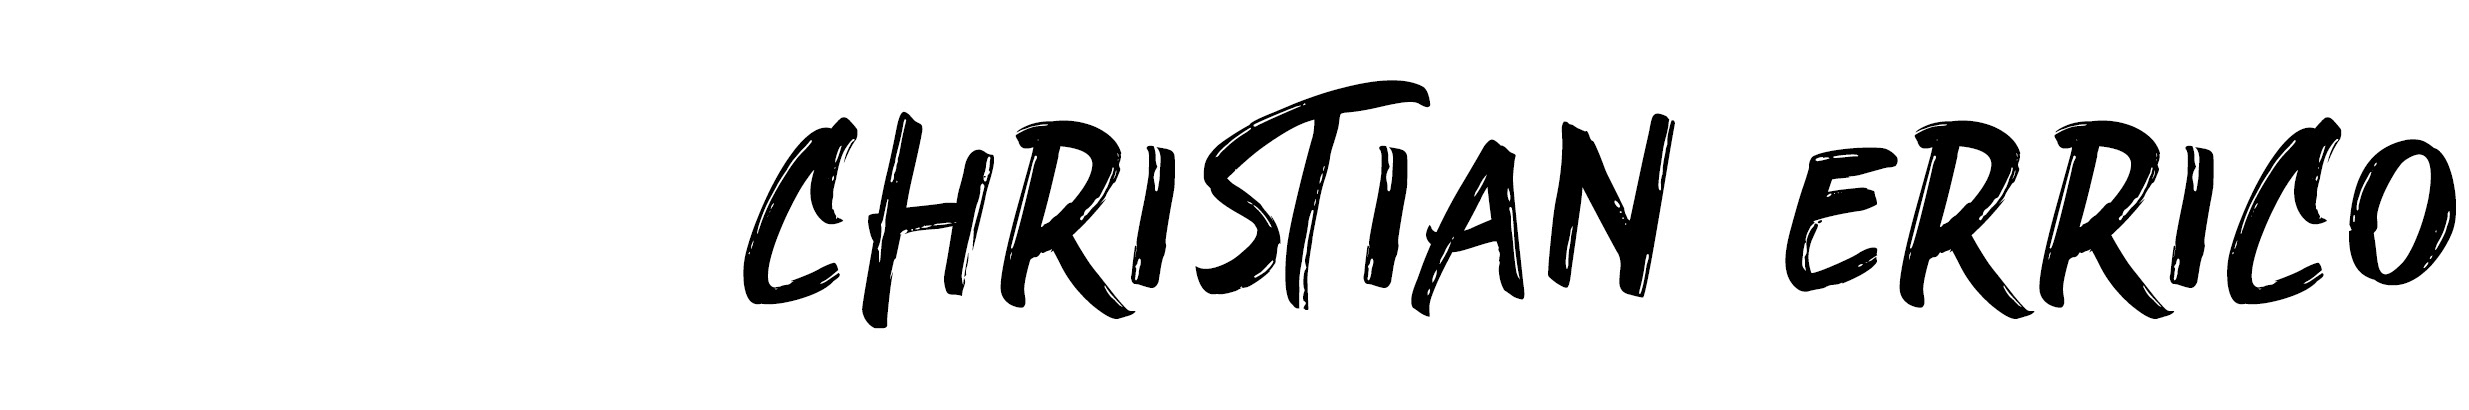 Christian Errico's profile banner